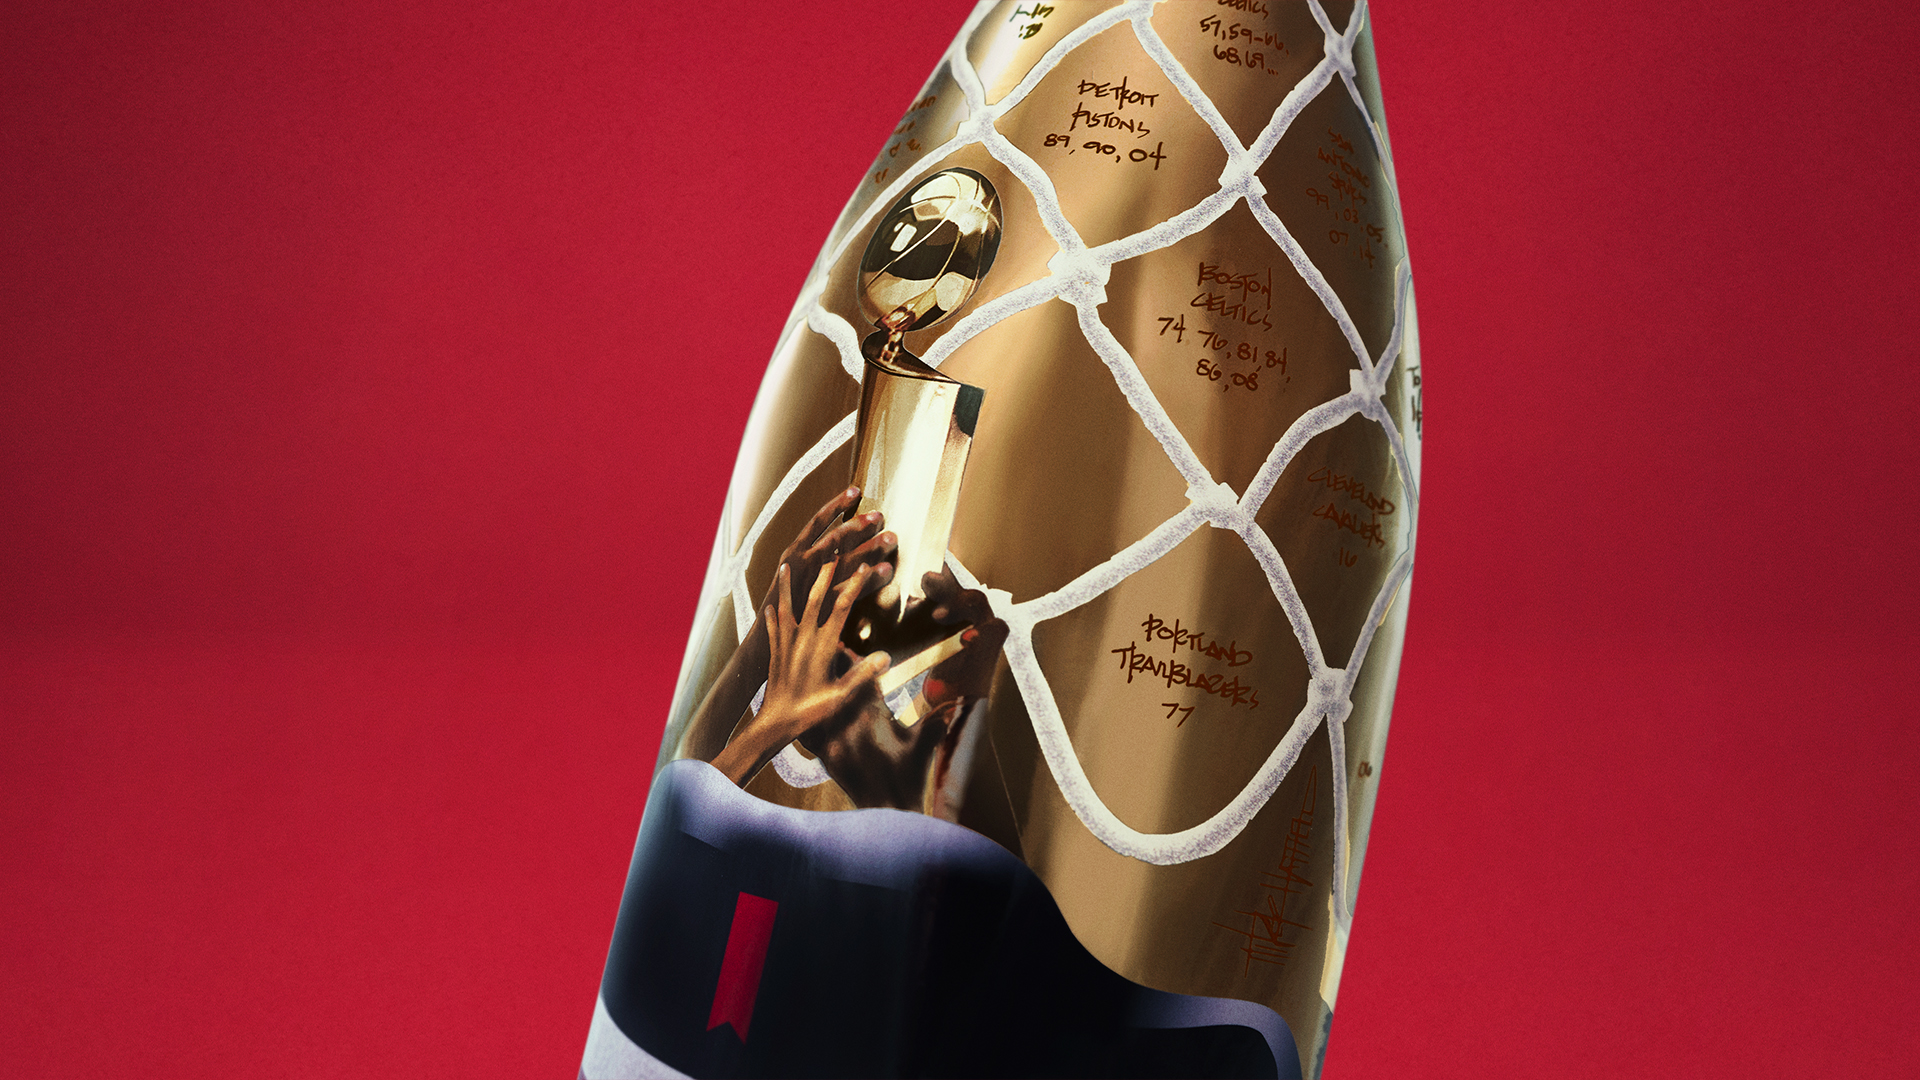 Michelob, Tinker Hatfield Unveil Exclusive NBA Championship Bottle